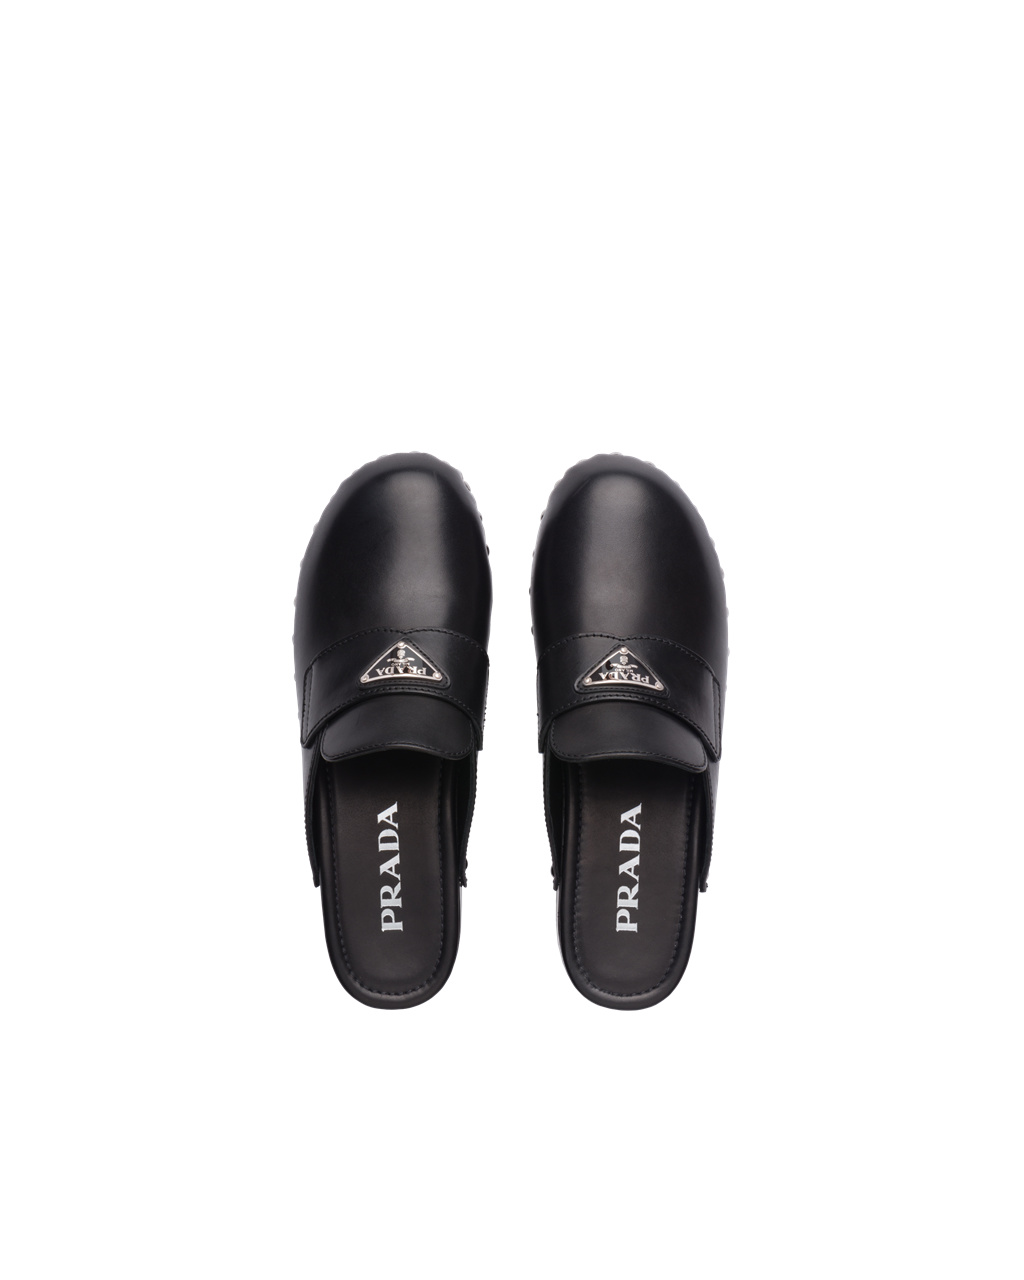 Prada Studded Leather Clogs Black | 8795GXFOJ